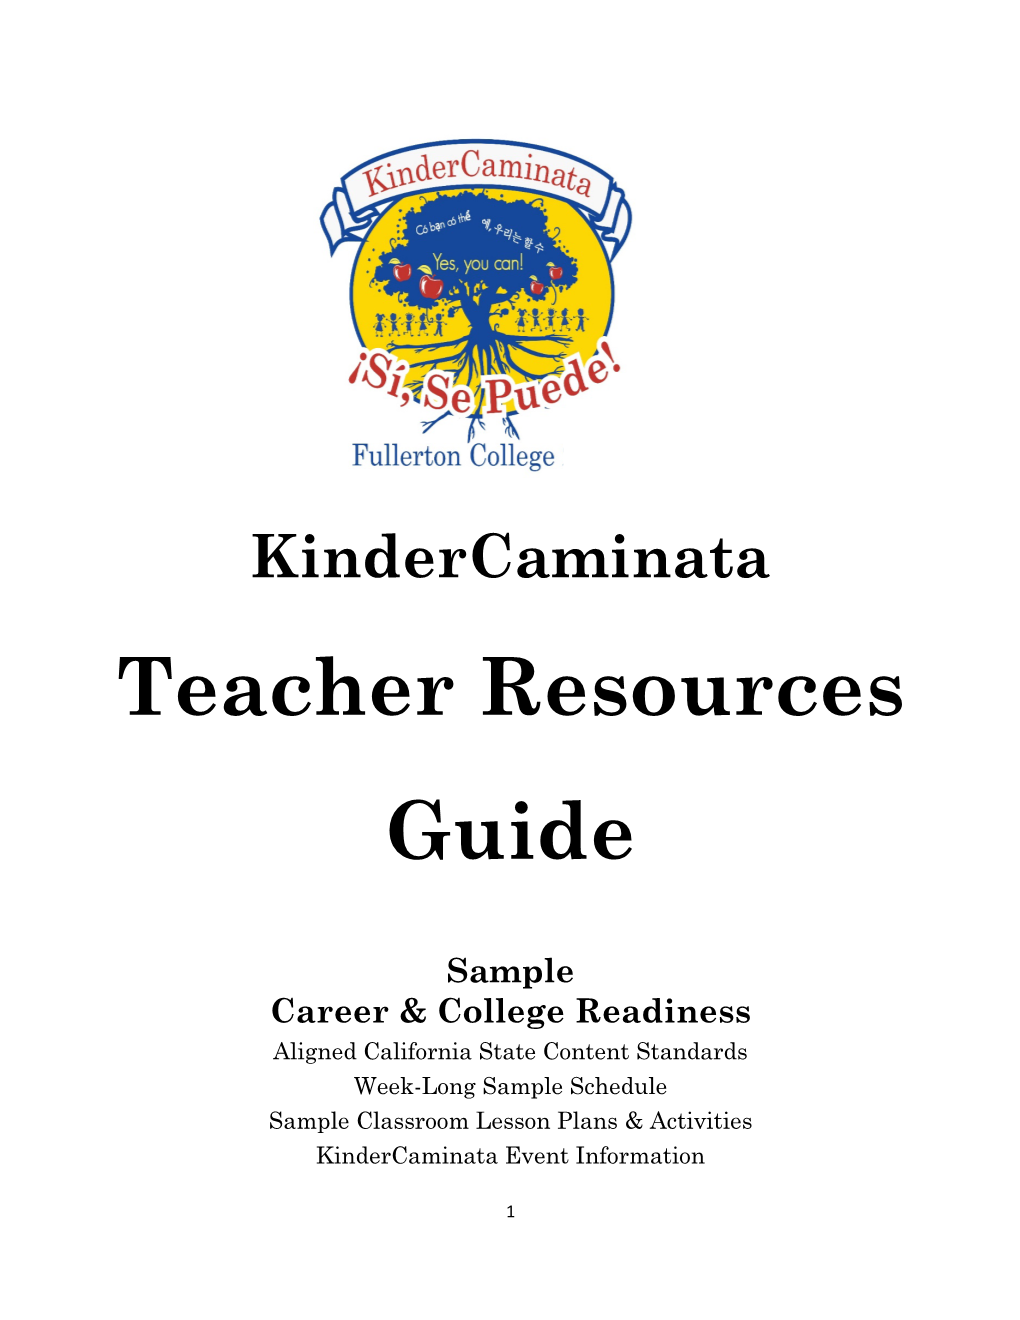 Teacher Resources Guide